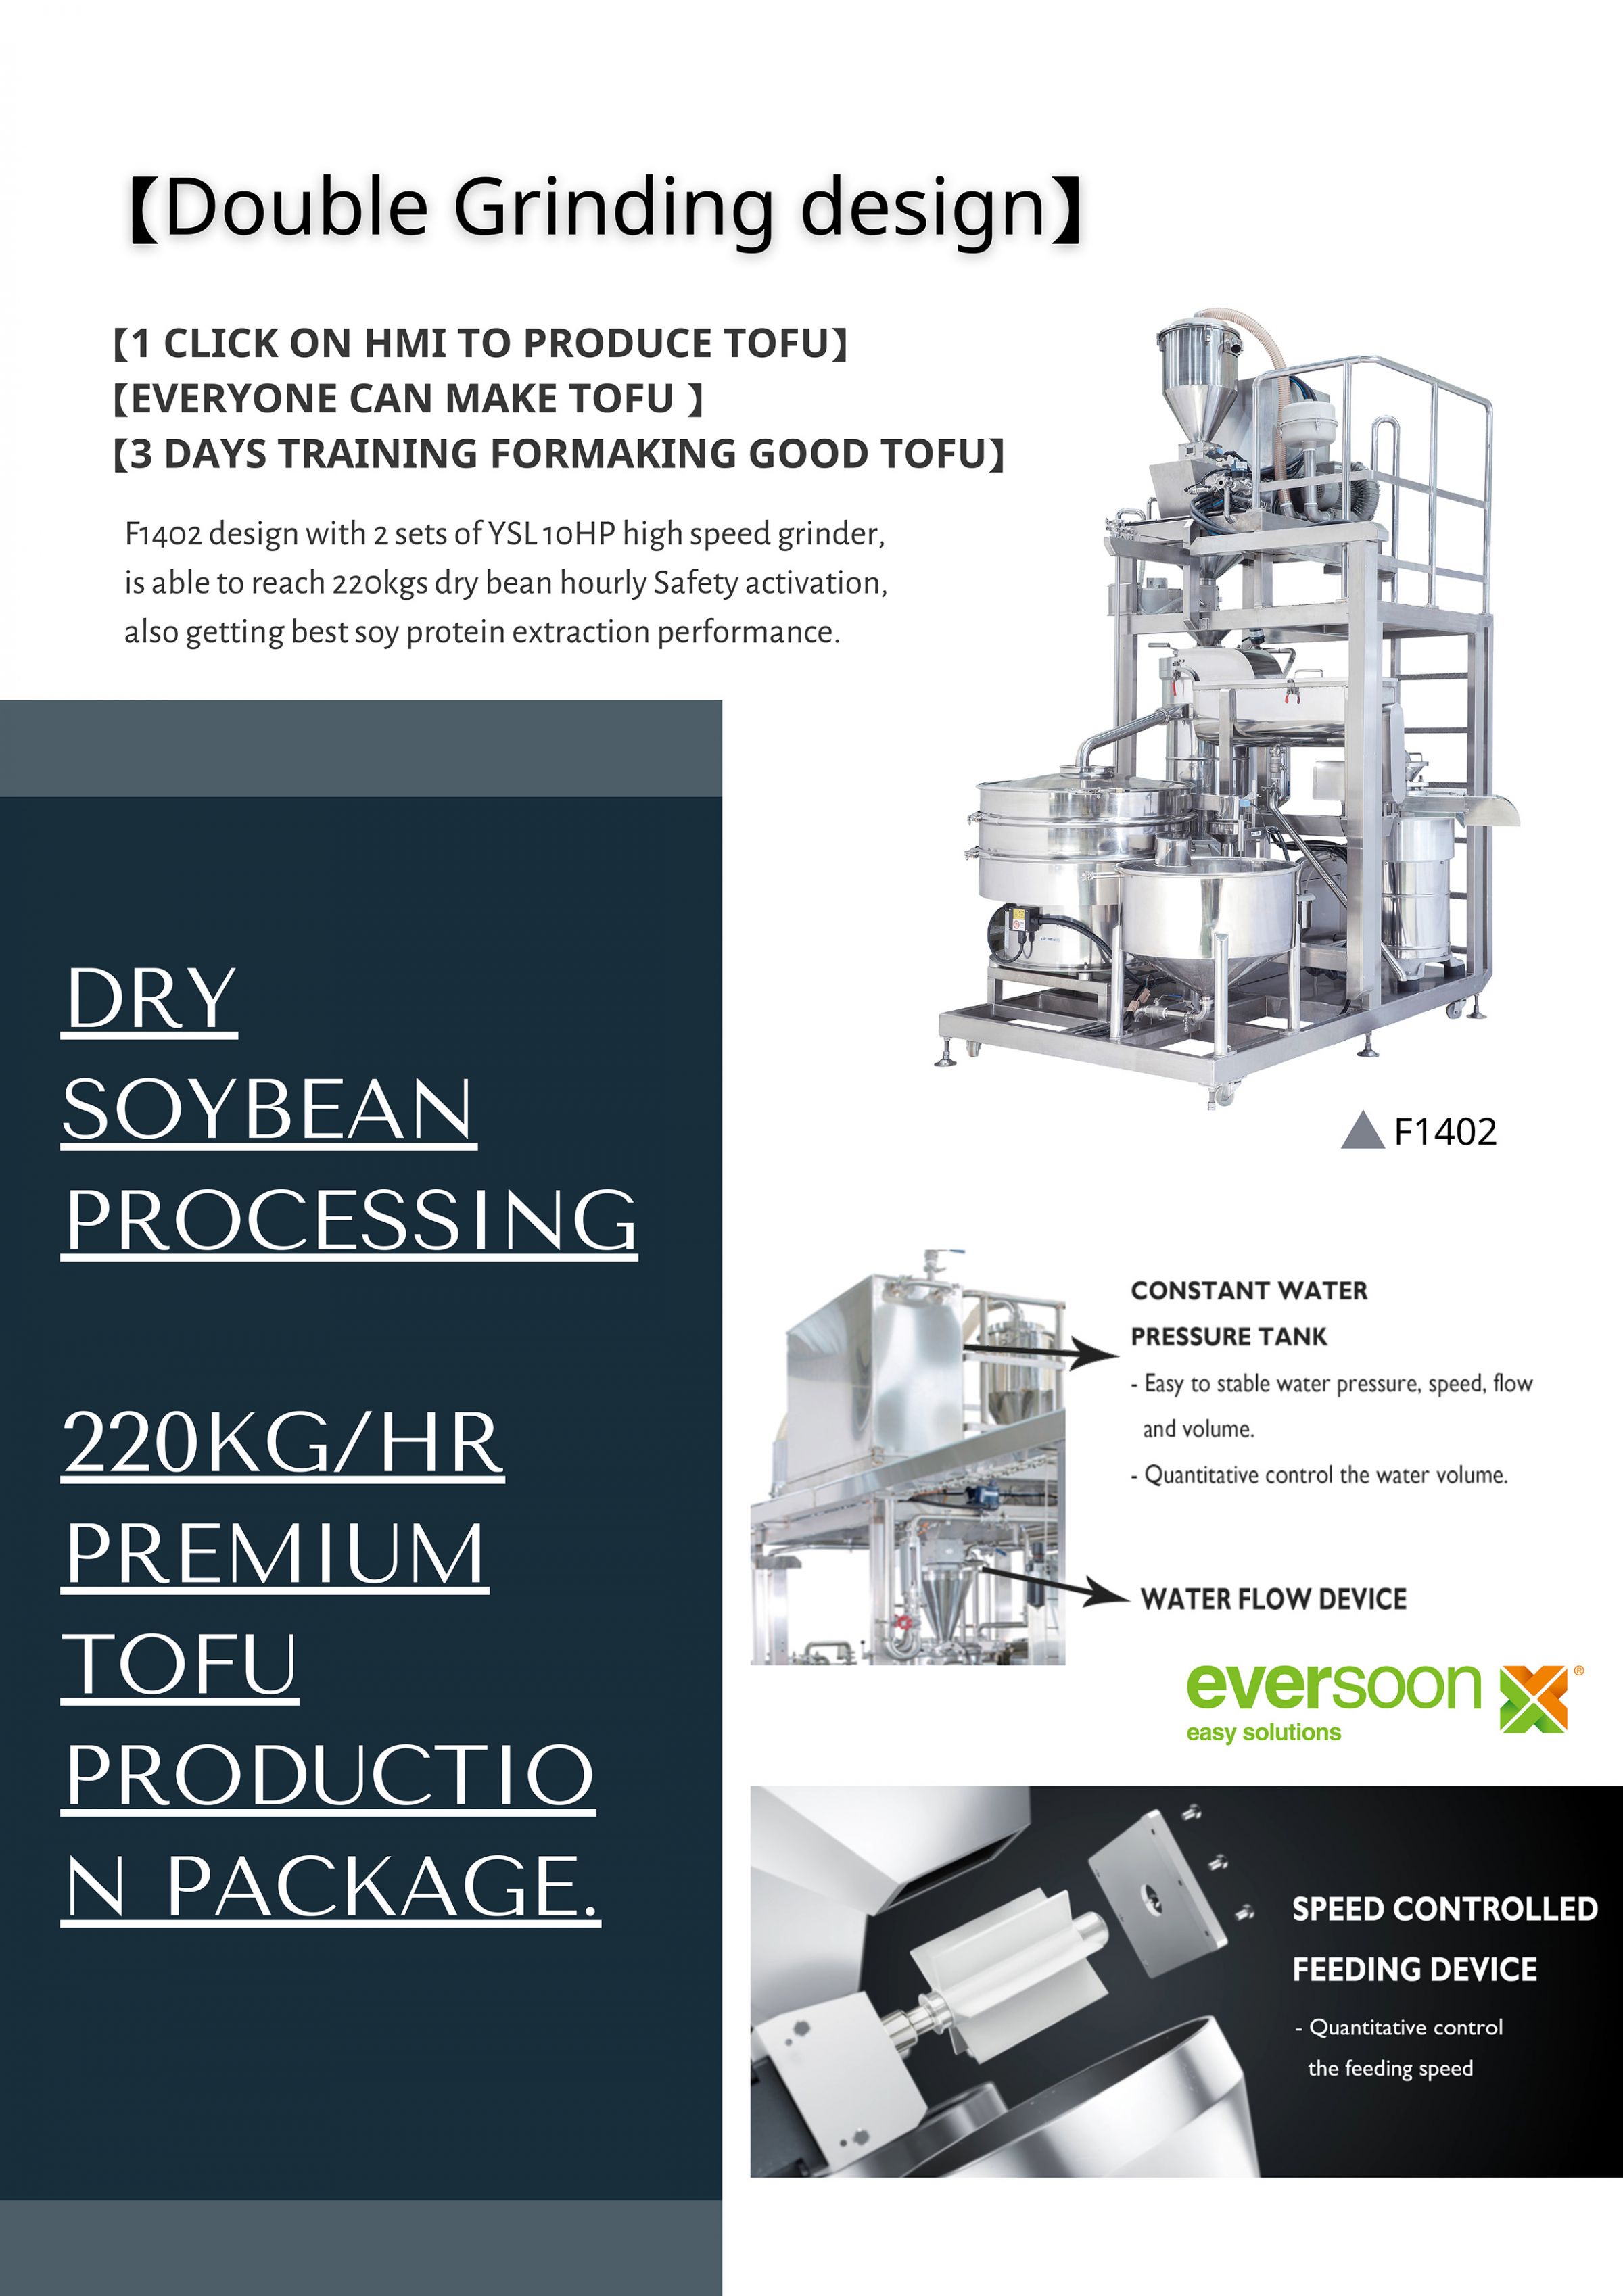 Machine de broyage et de séparation d'okara - Machine automatique de broyage  de soja et de séparation d'okara, Fabricant d'équipements de  transformation de soja basé à Taïwan depuis 1989